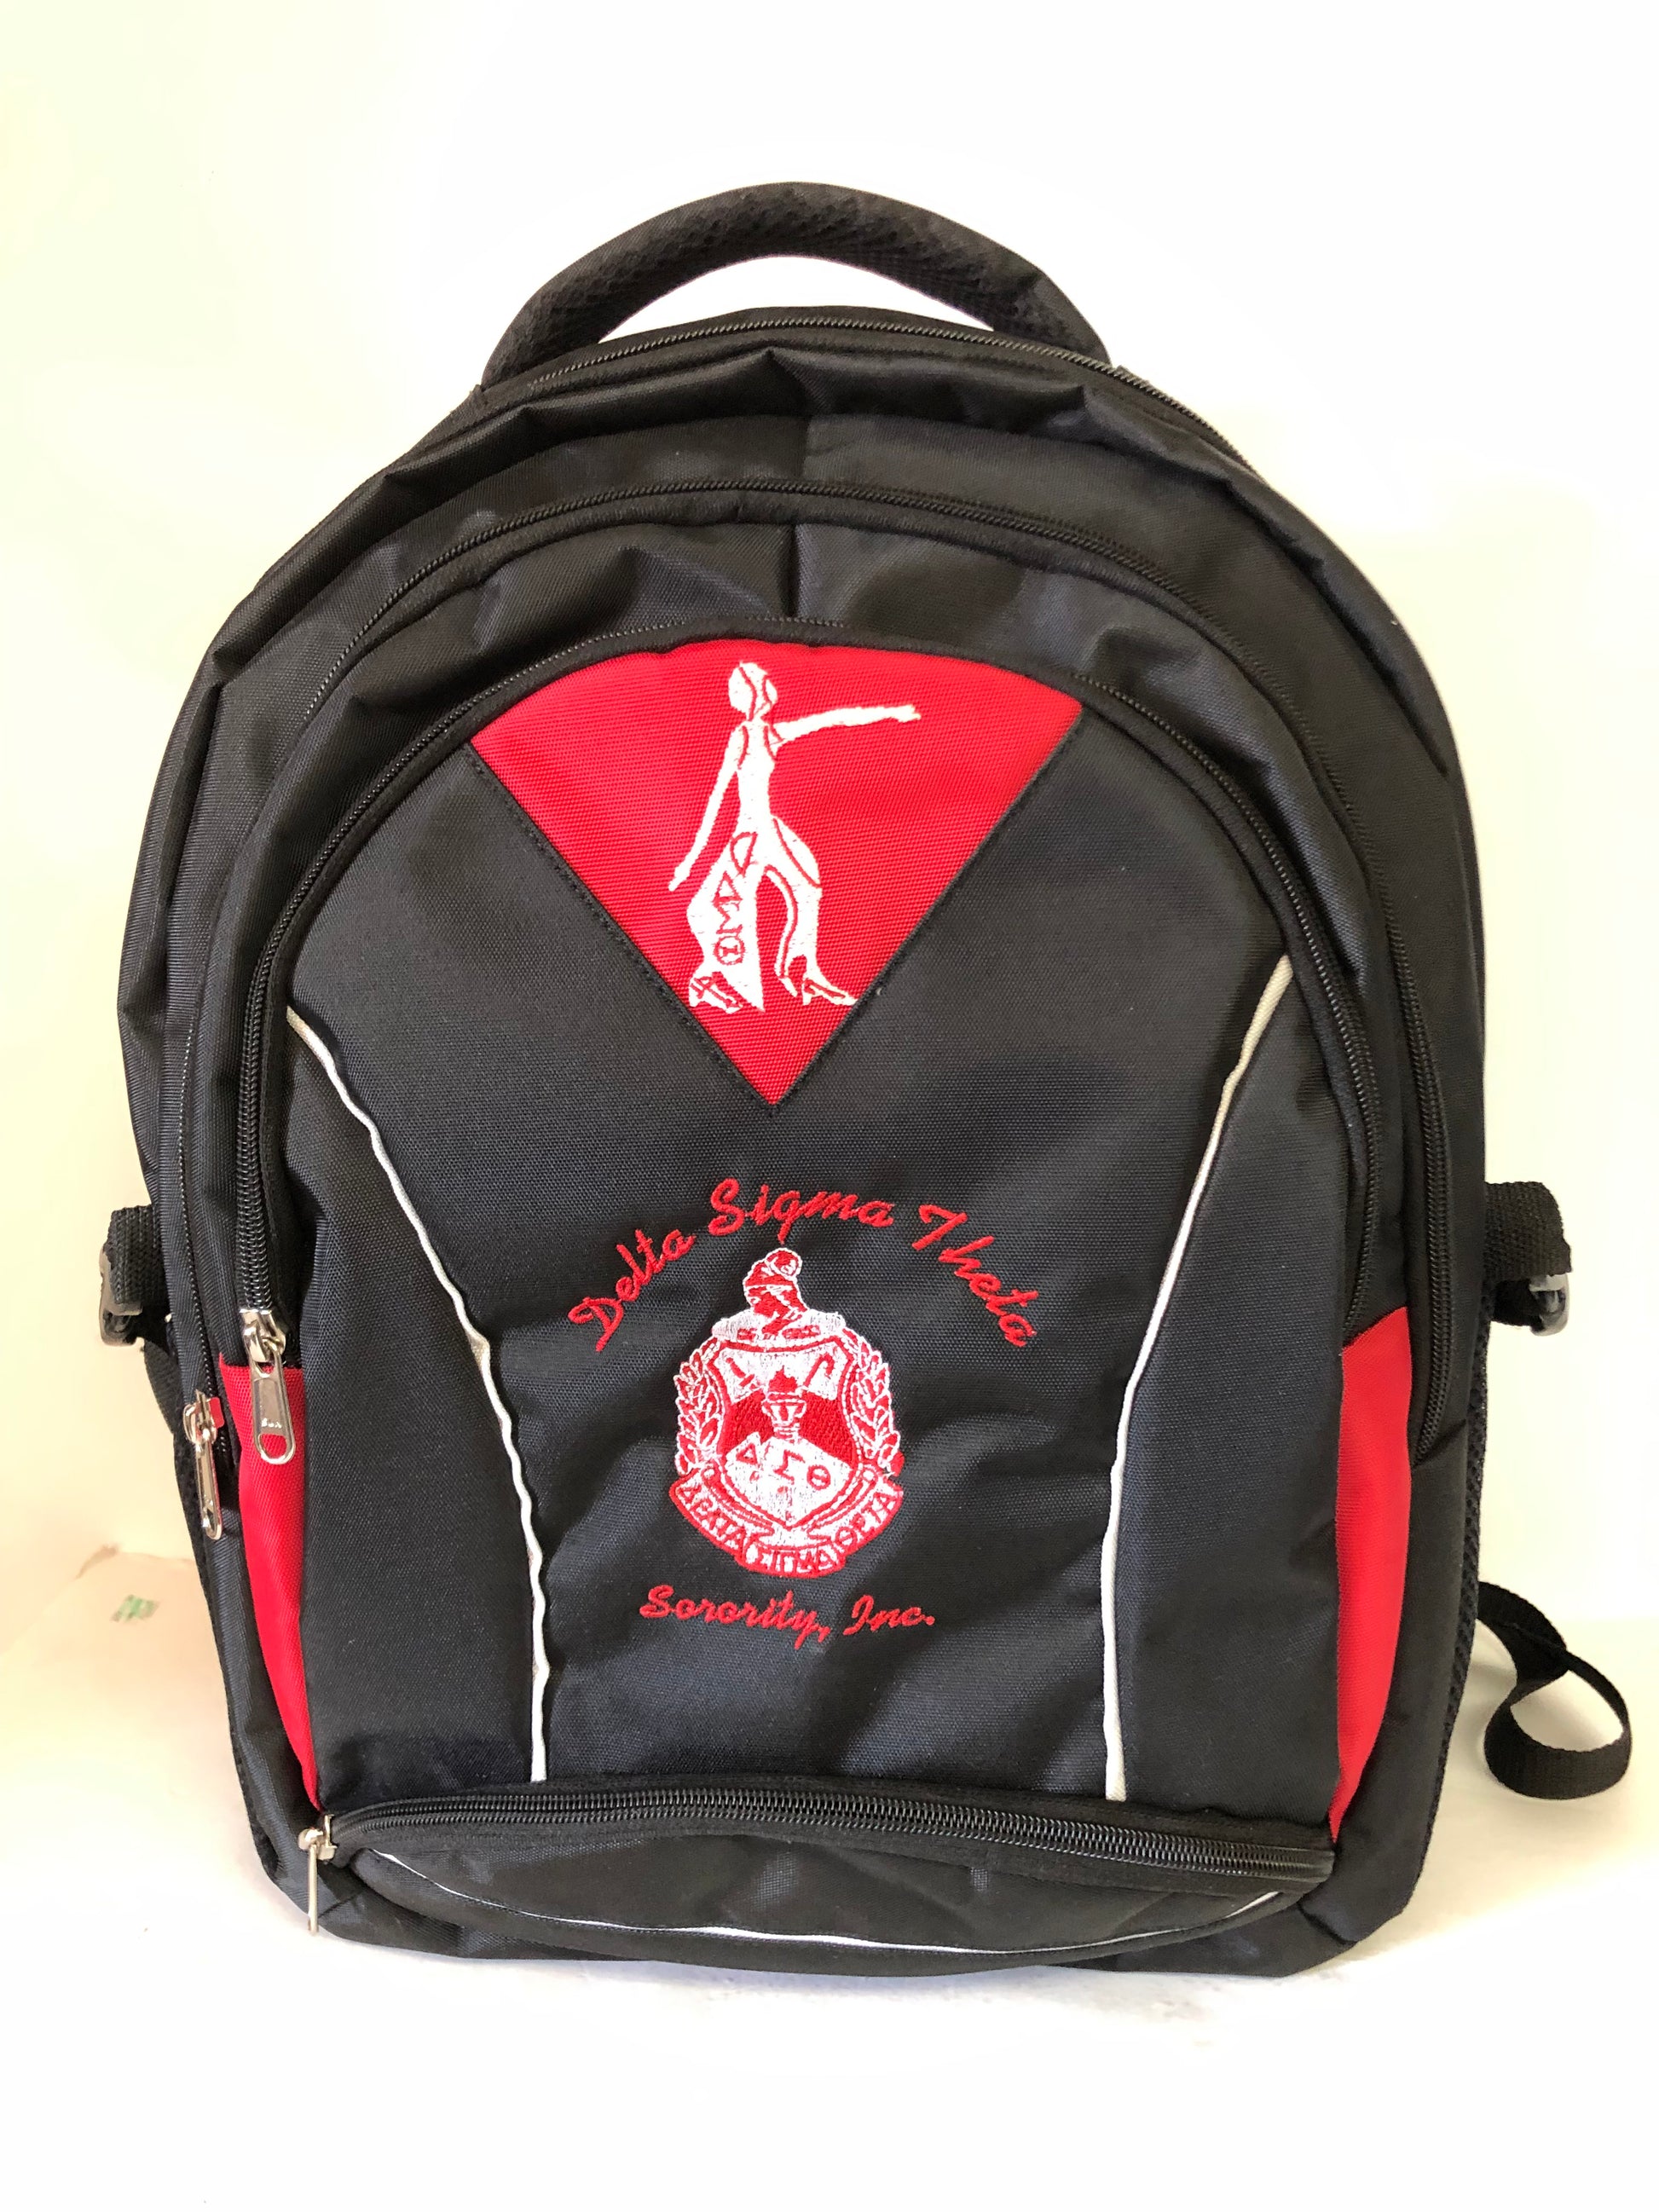 Delta sigma theta backpack